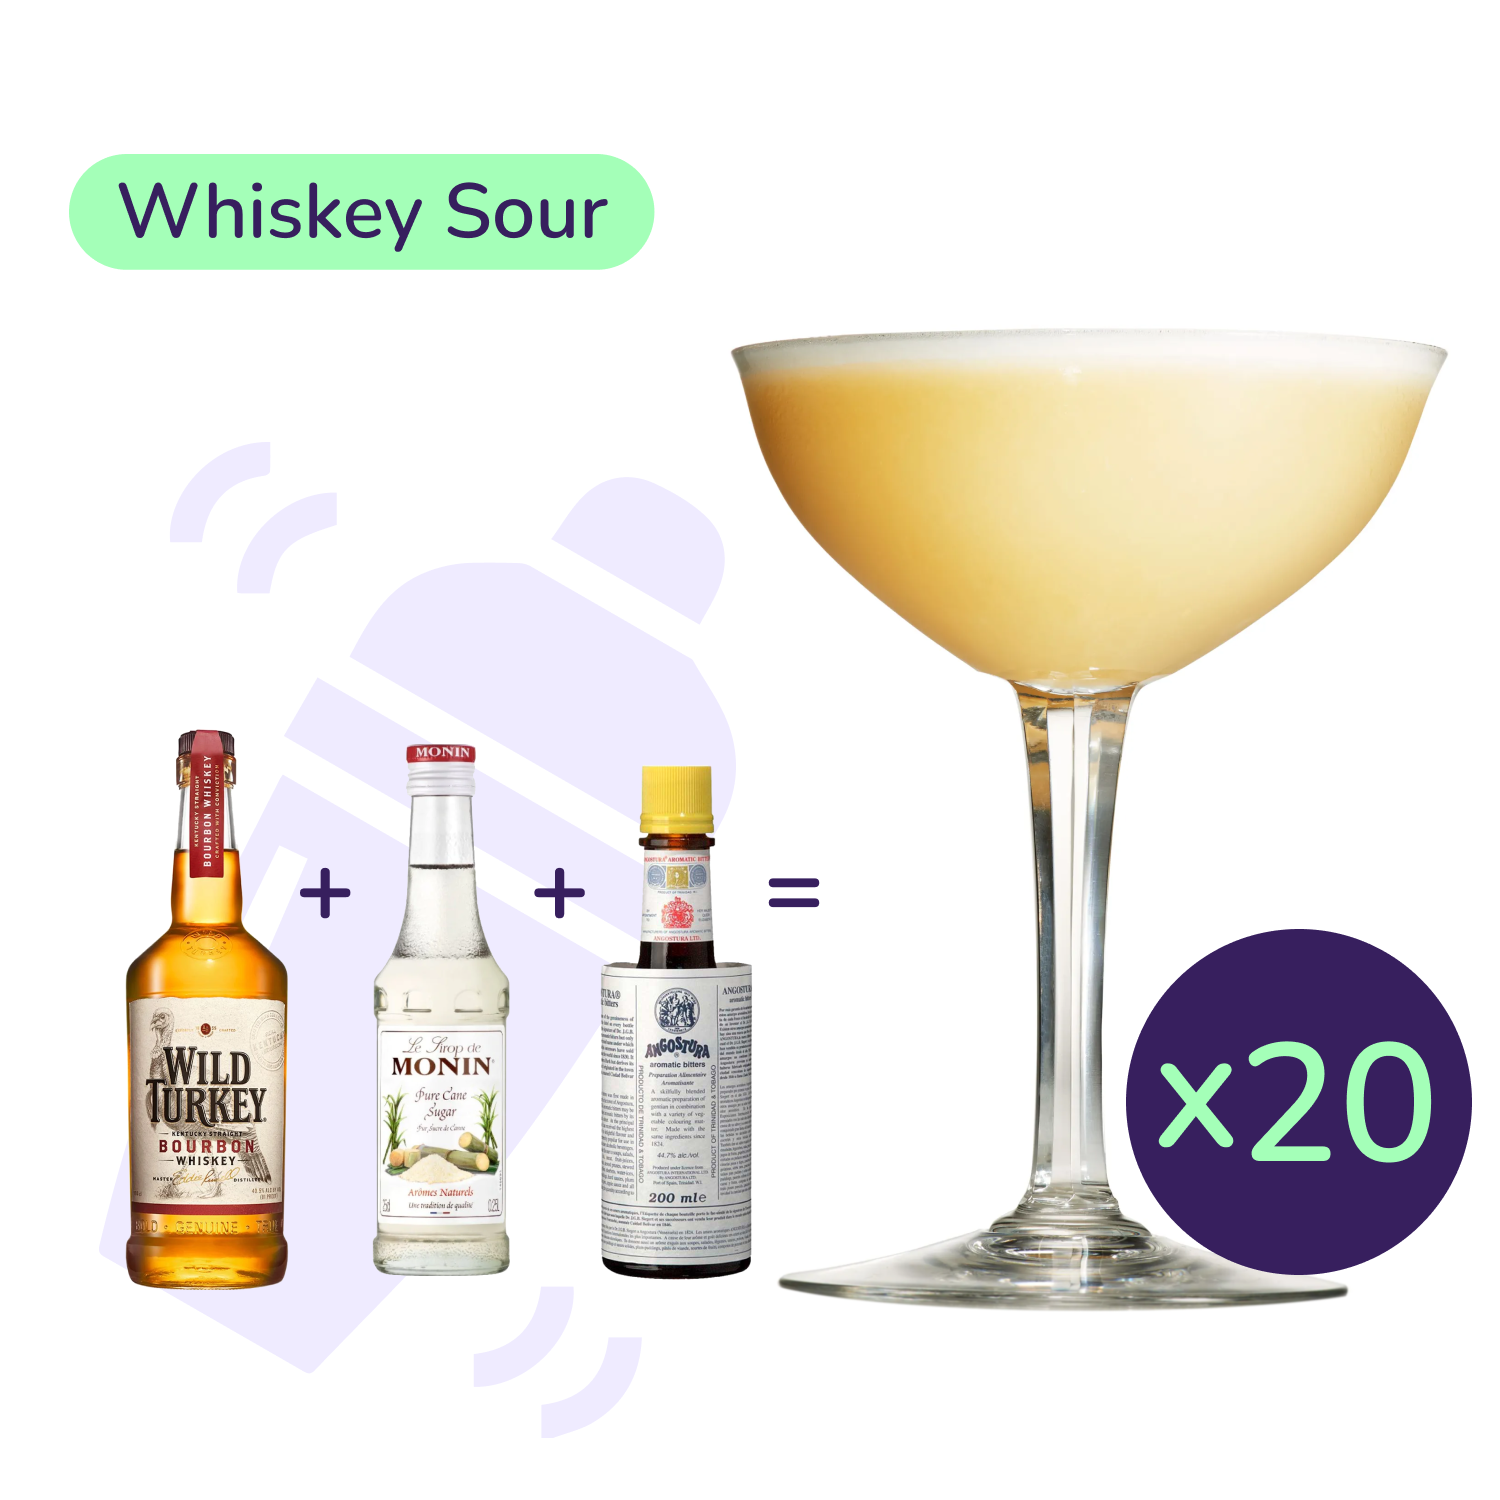 Коктейль Whiskey Sour (набор ингредиентов) х20 на основе Wild Turkey - фото 1